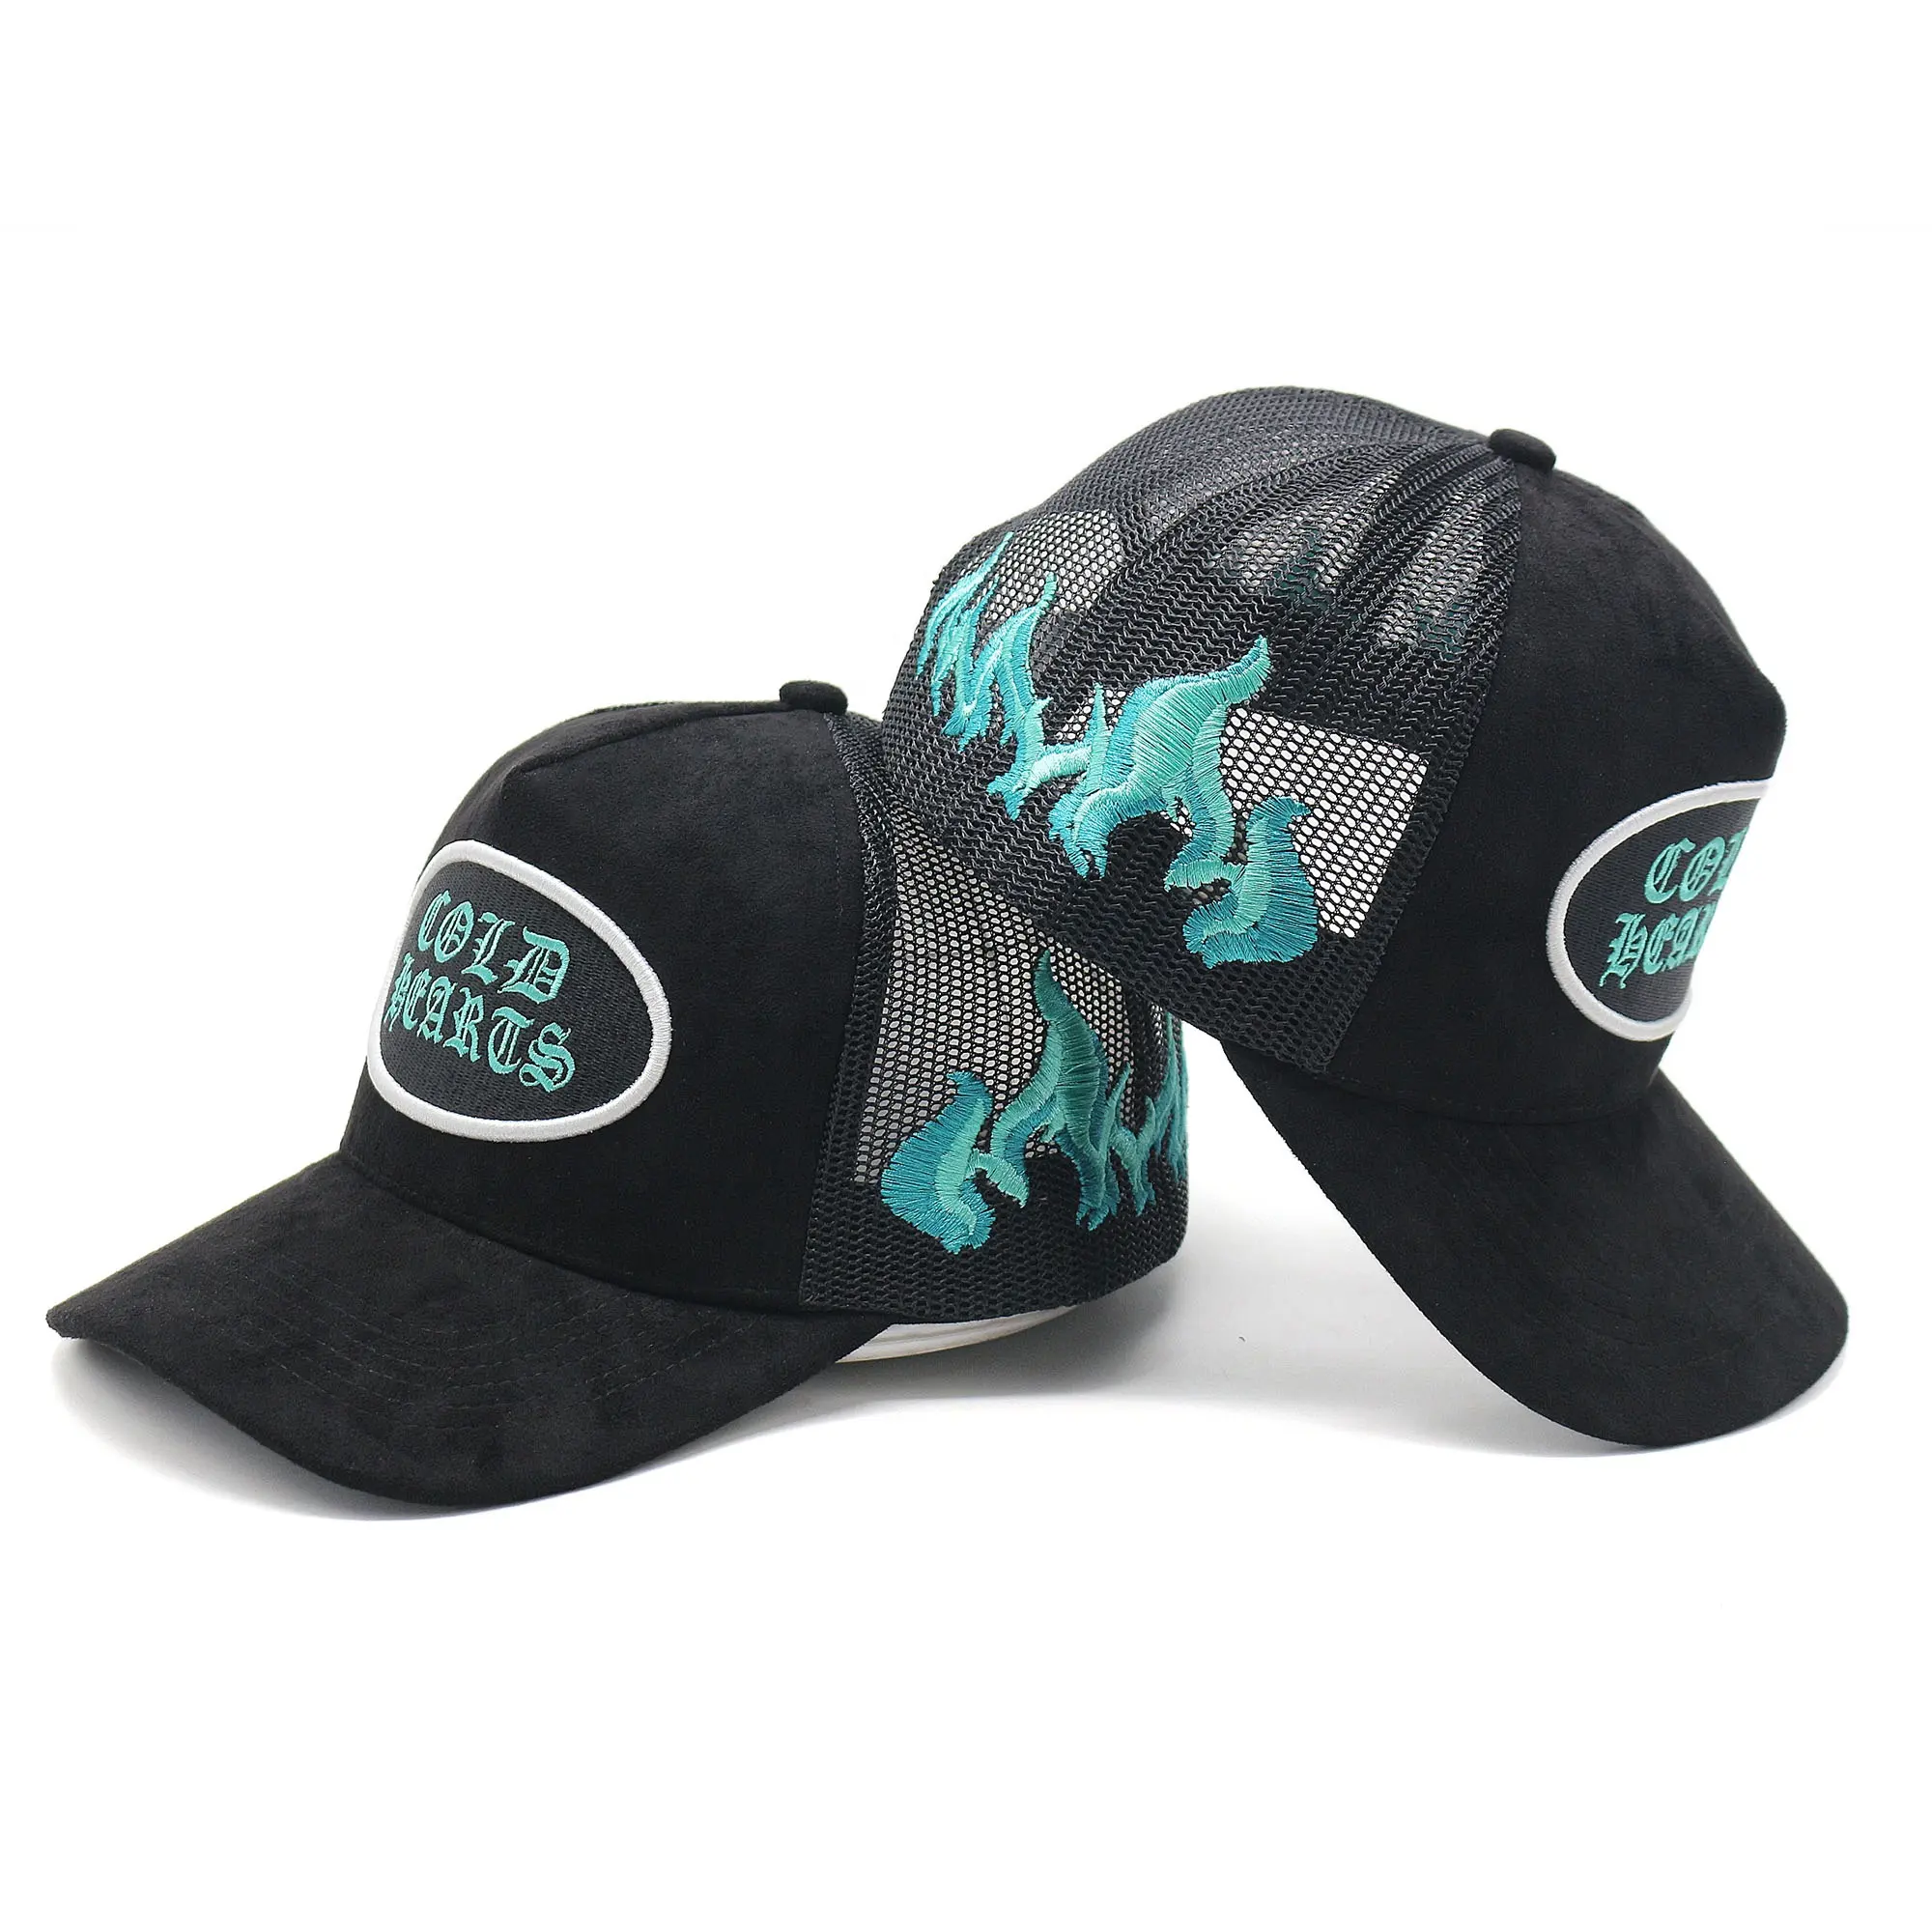 Grosir topi trucker suede fashion dengan flam logo patch bordir biru merak